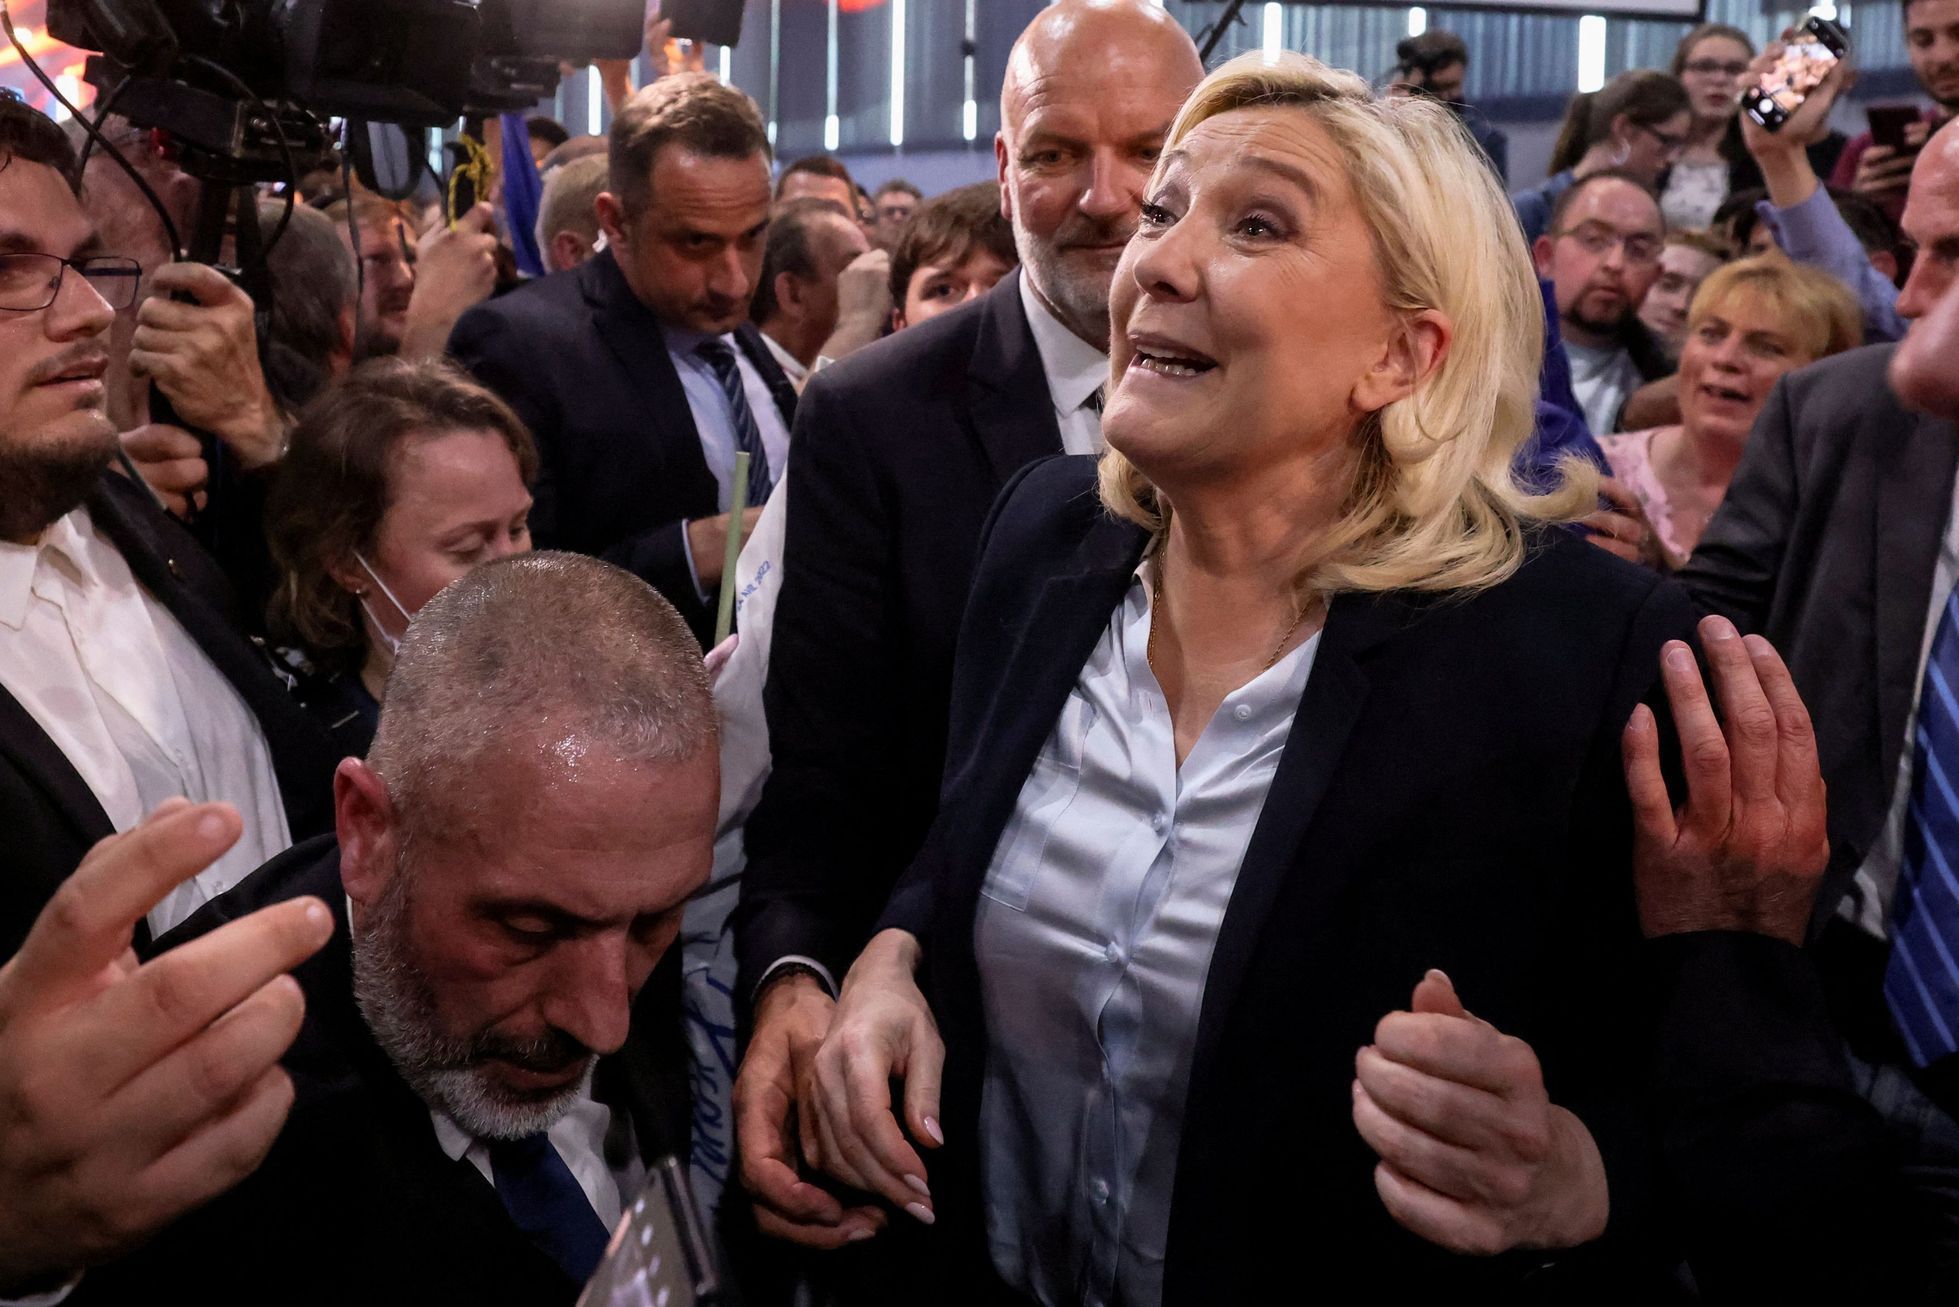 Marine Le Penová, Francie, volby